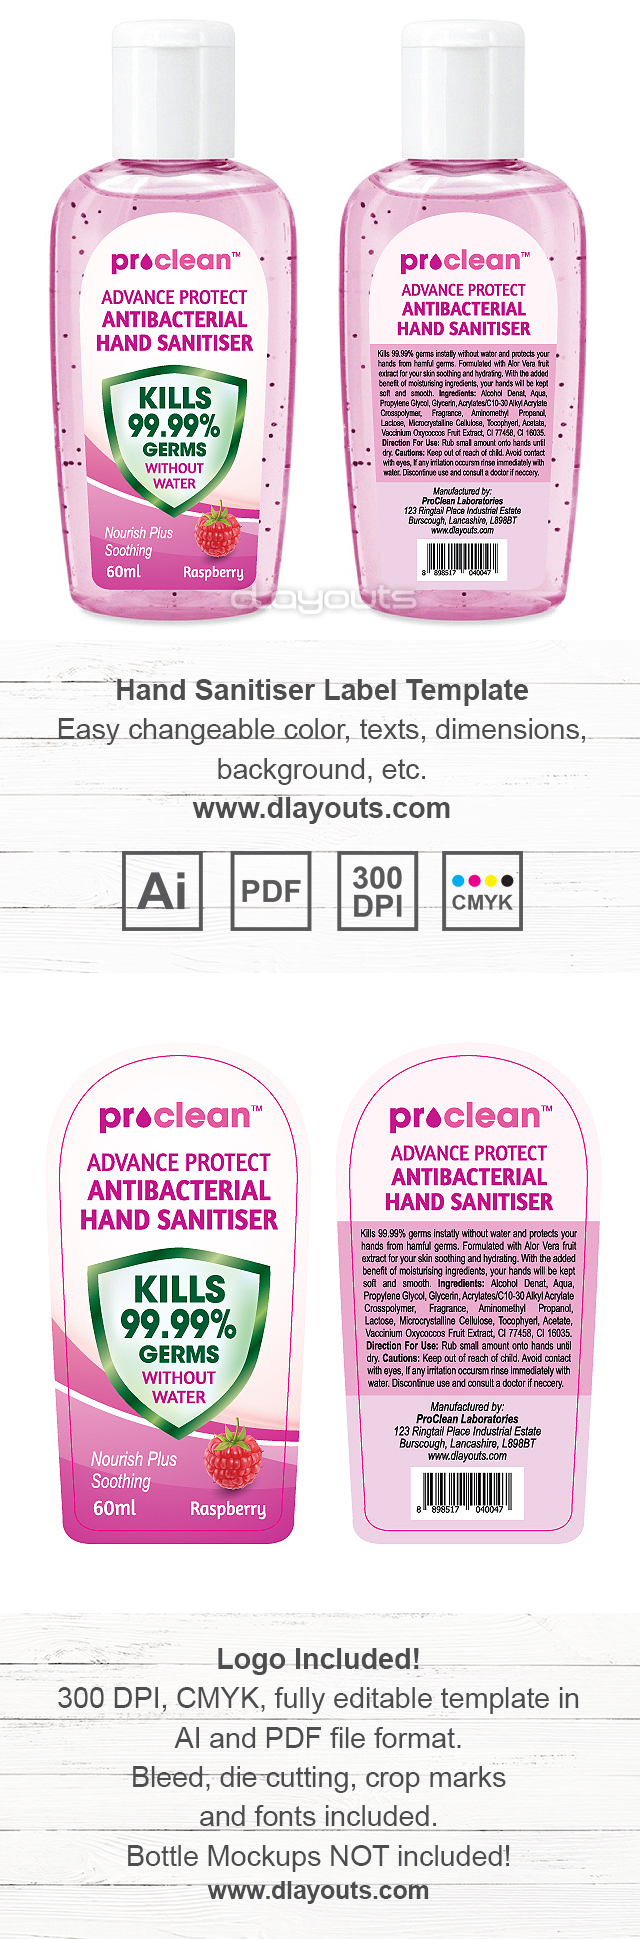 Hand Sanitizer Label Template Design For Hand Sanitizer Label Template